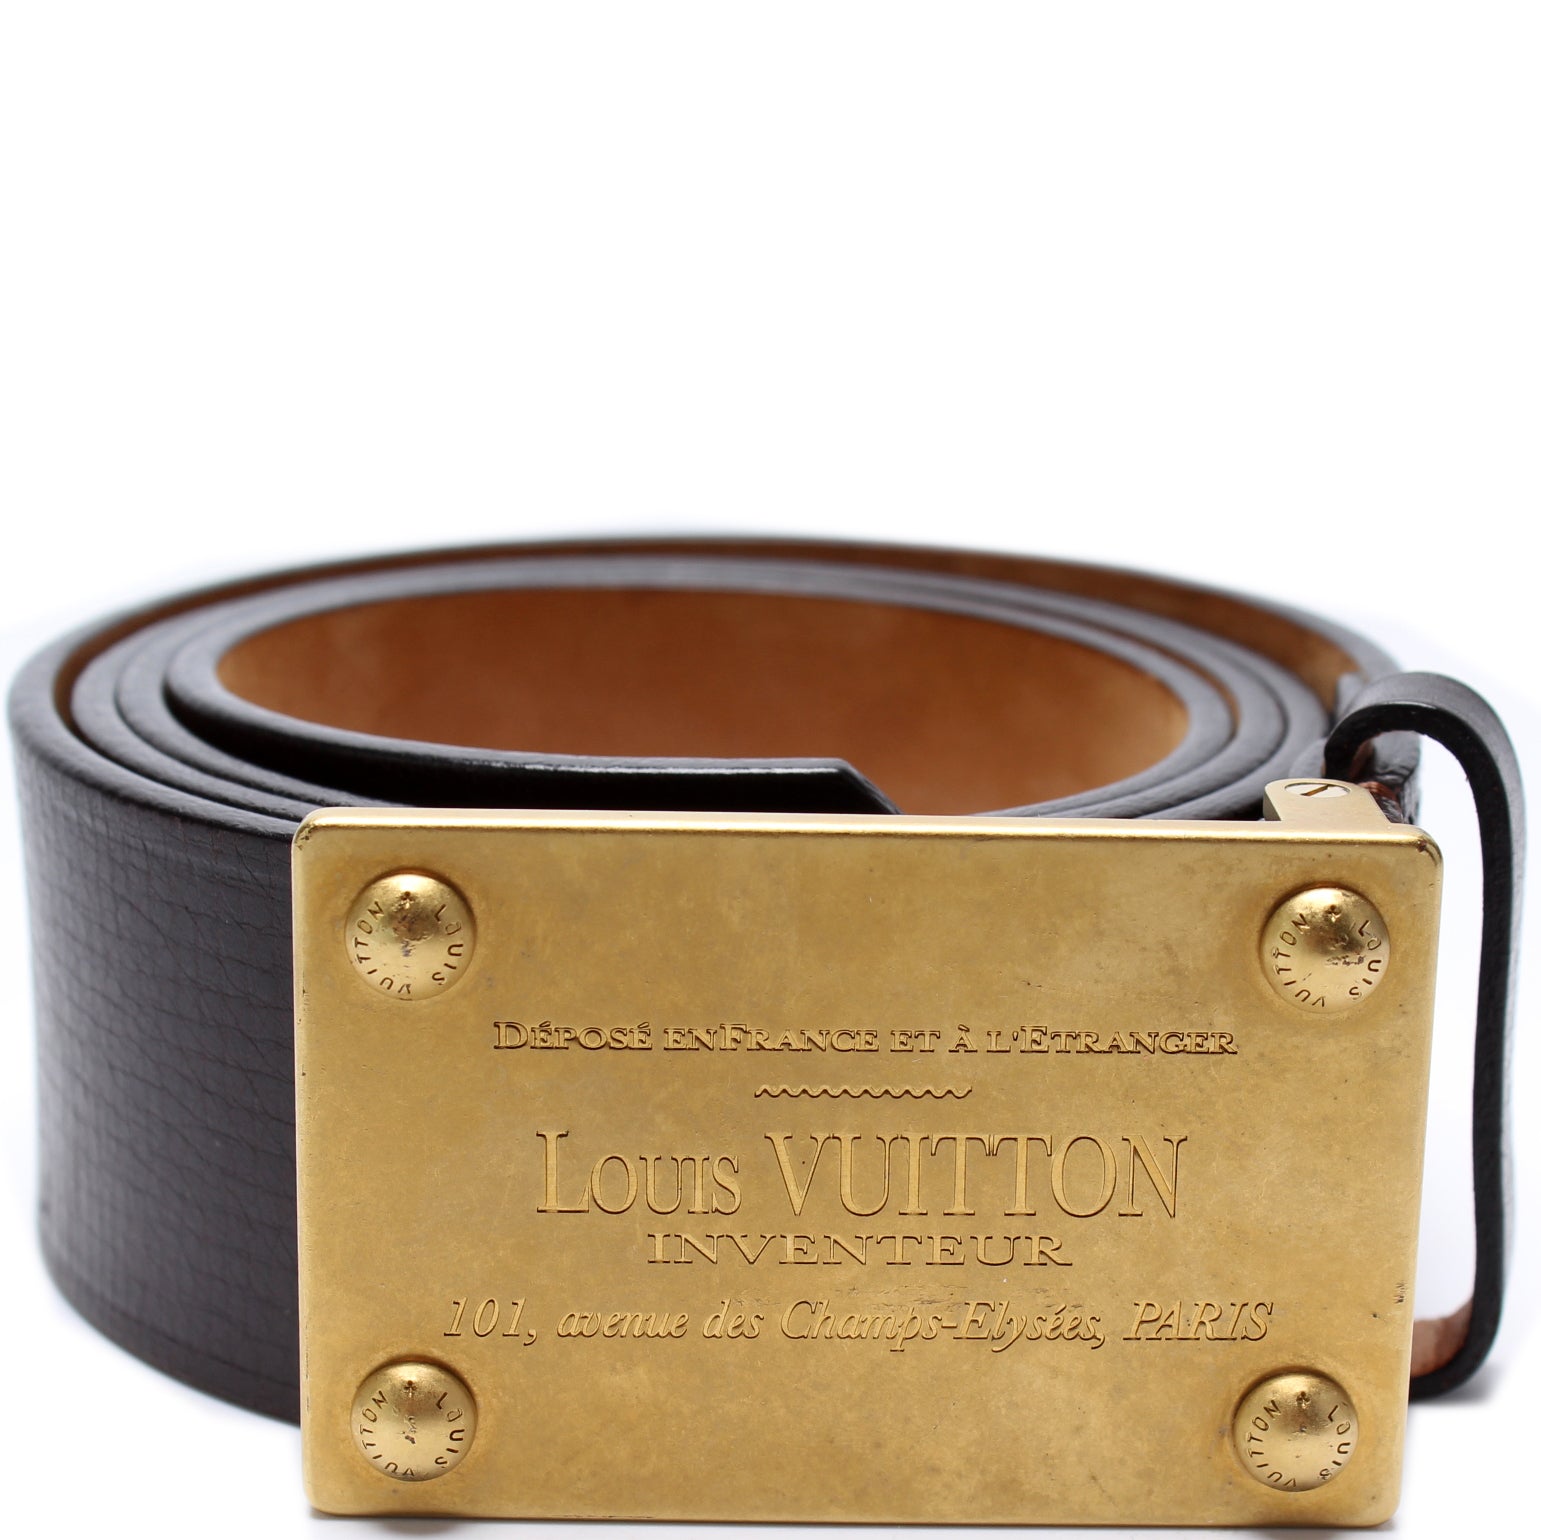 vuitton brown leather belt